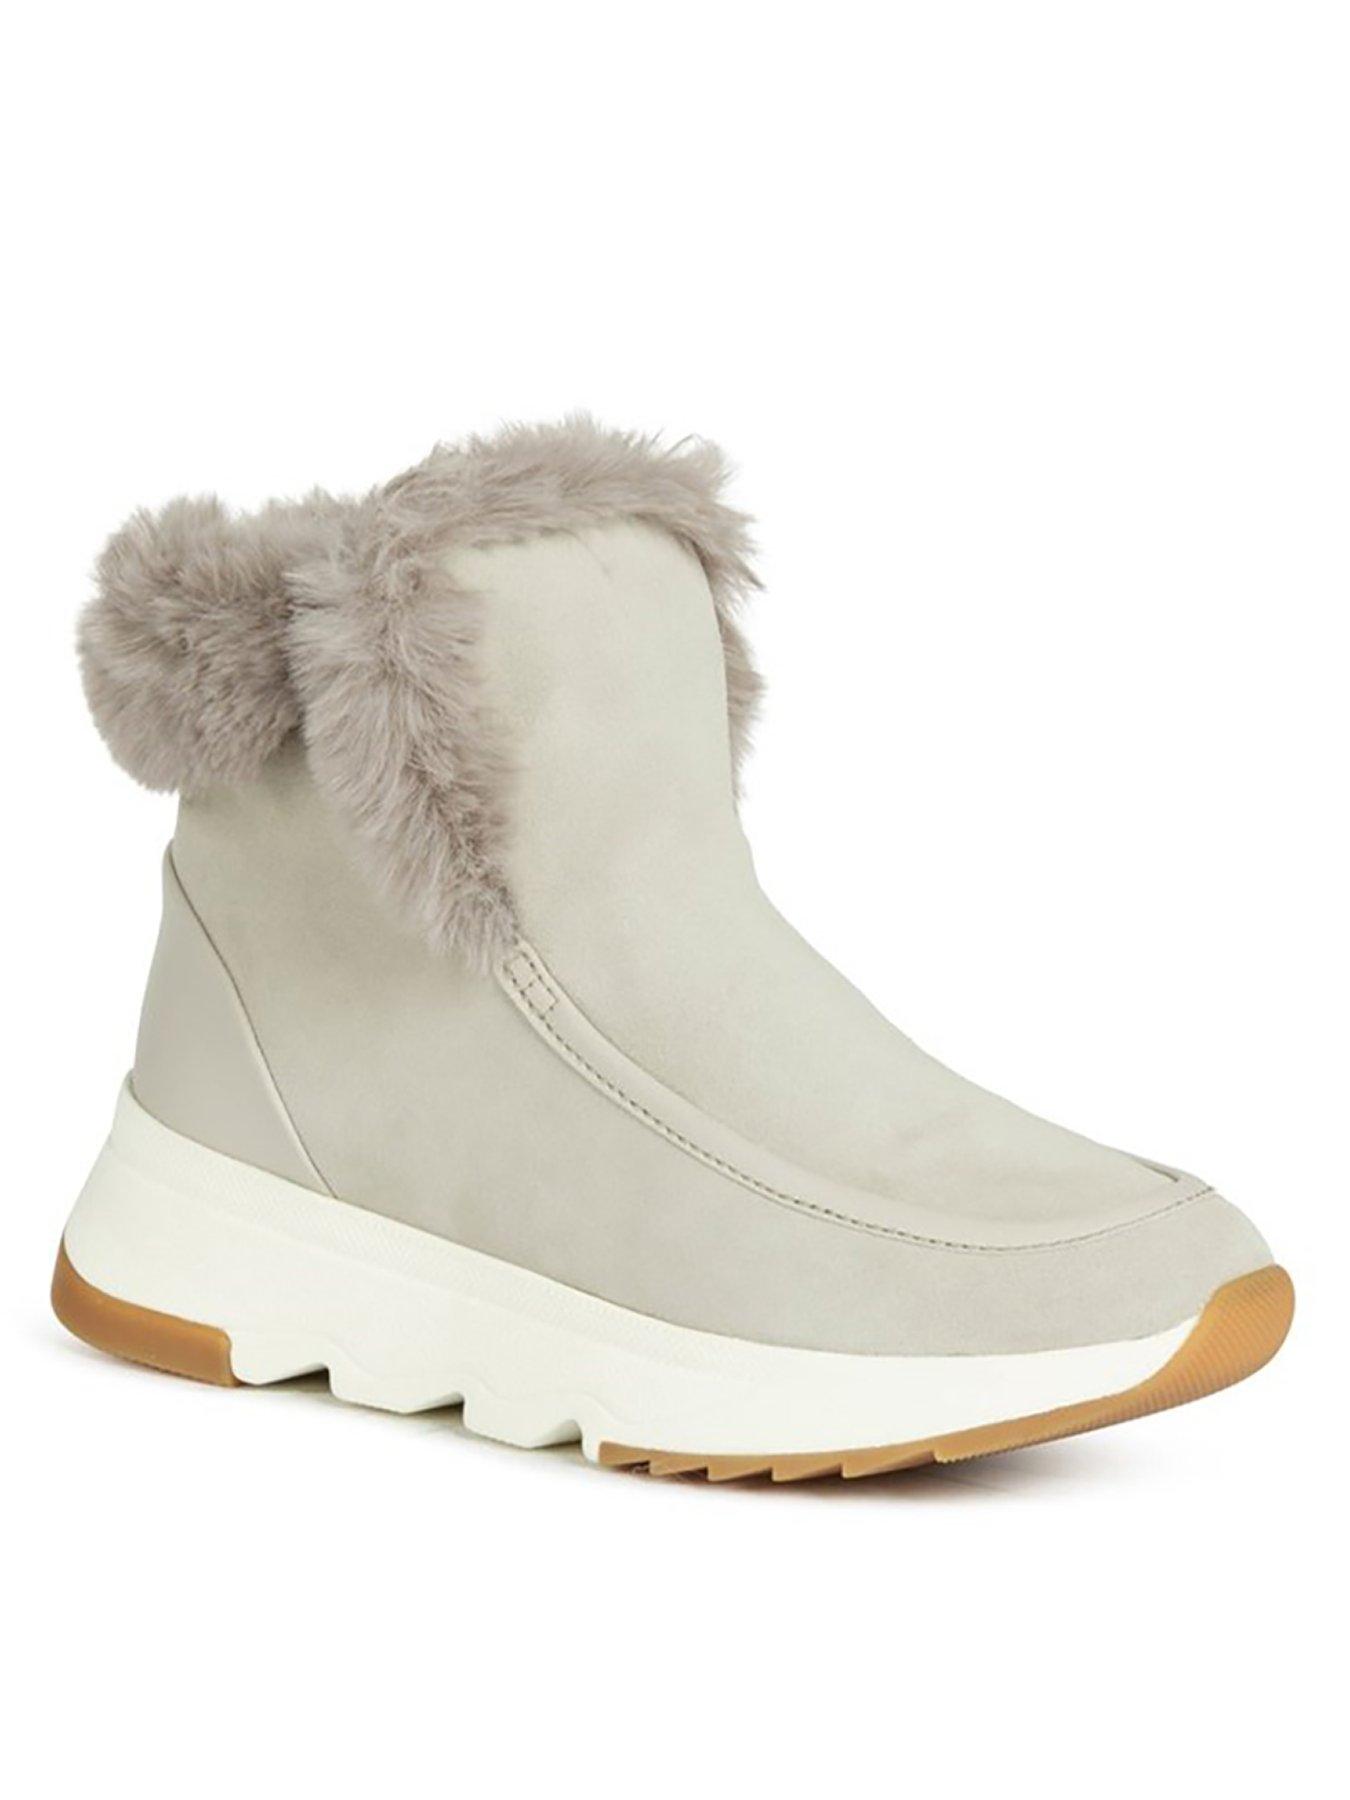 Details about   US Size 4-15 Women Winter Fur Trim Side Zip Round Toe Block Mid Heel Ankle Boots 